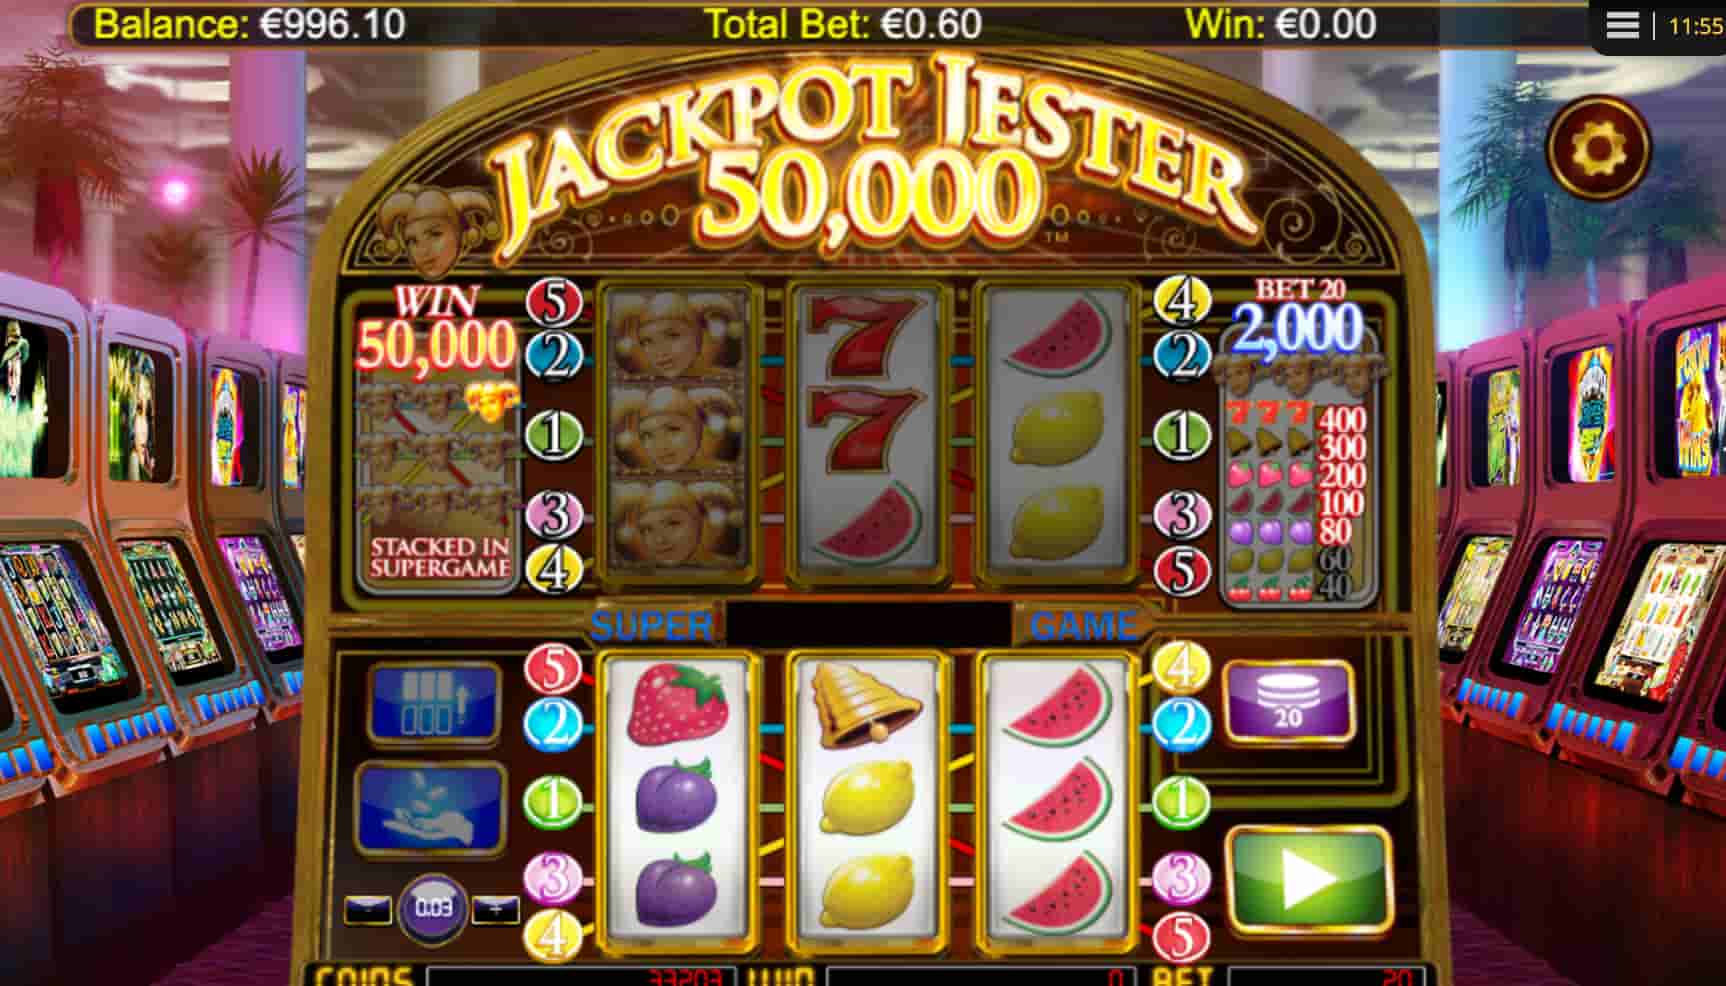 Jackpot Jester 50k screenshot 3